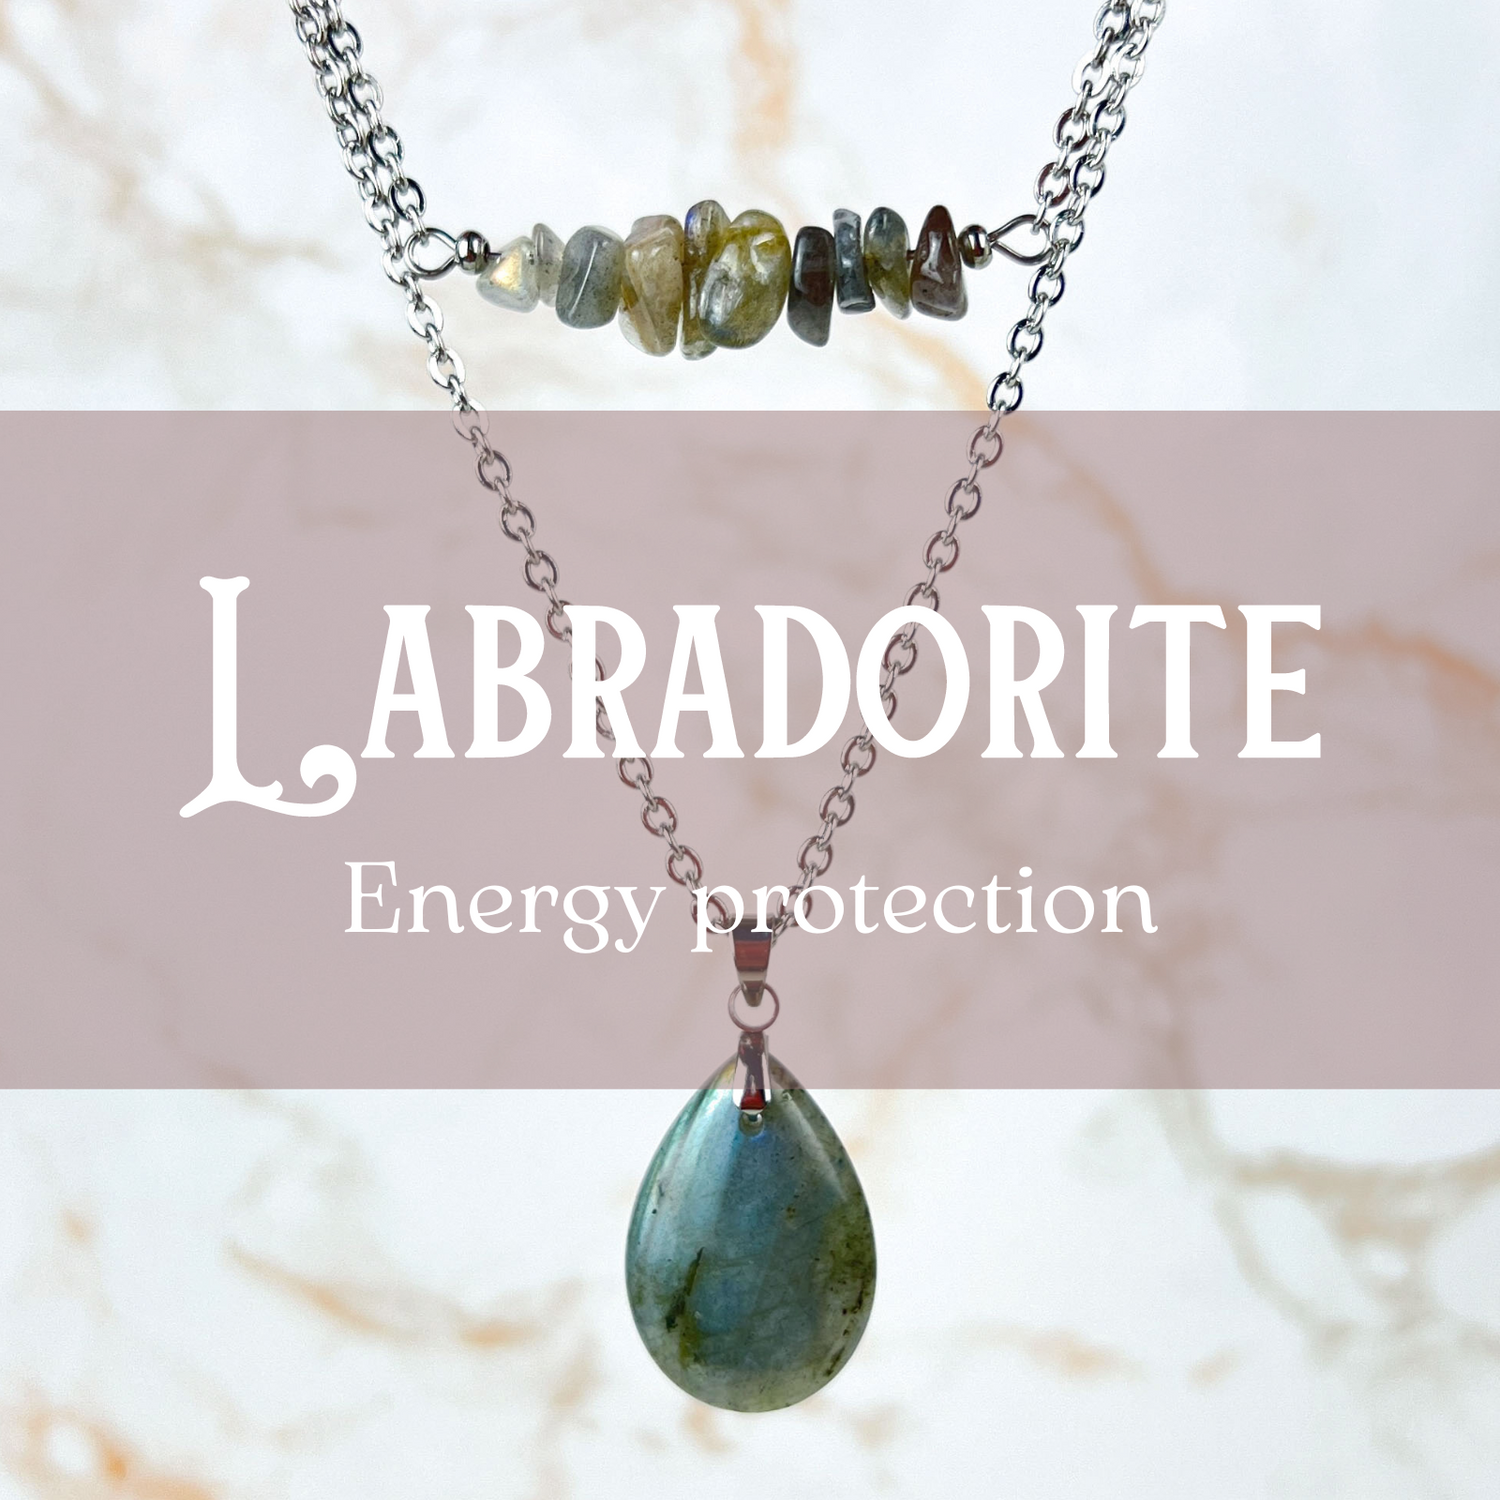 Labradorite jewelry